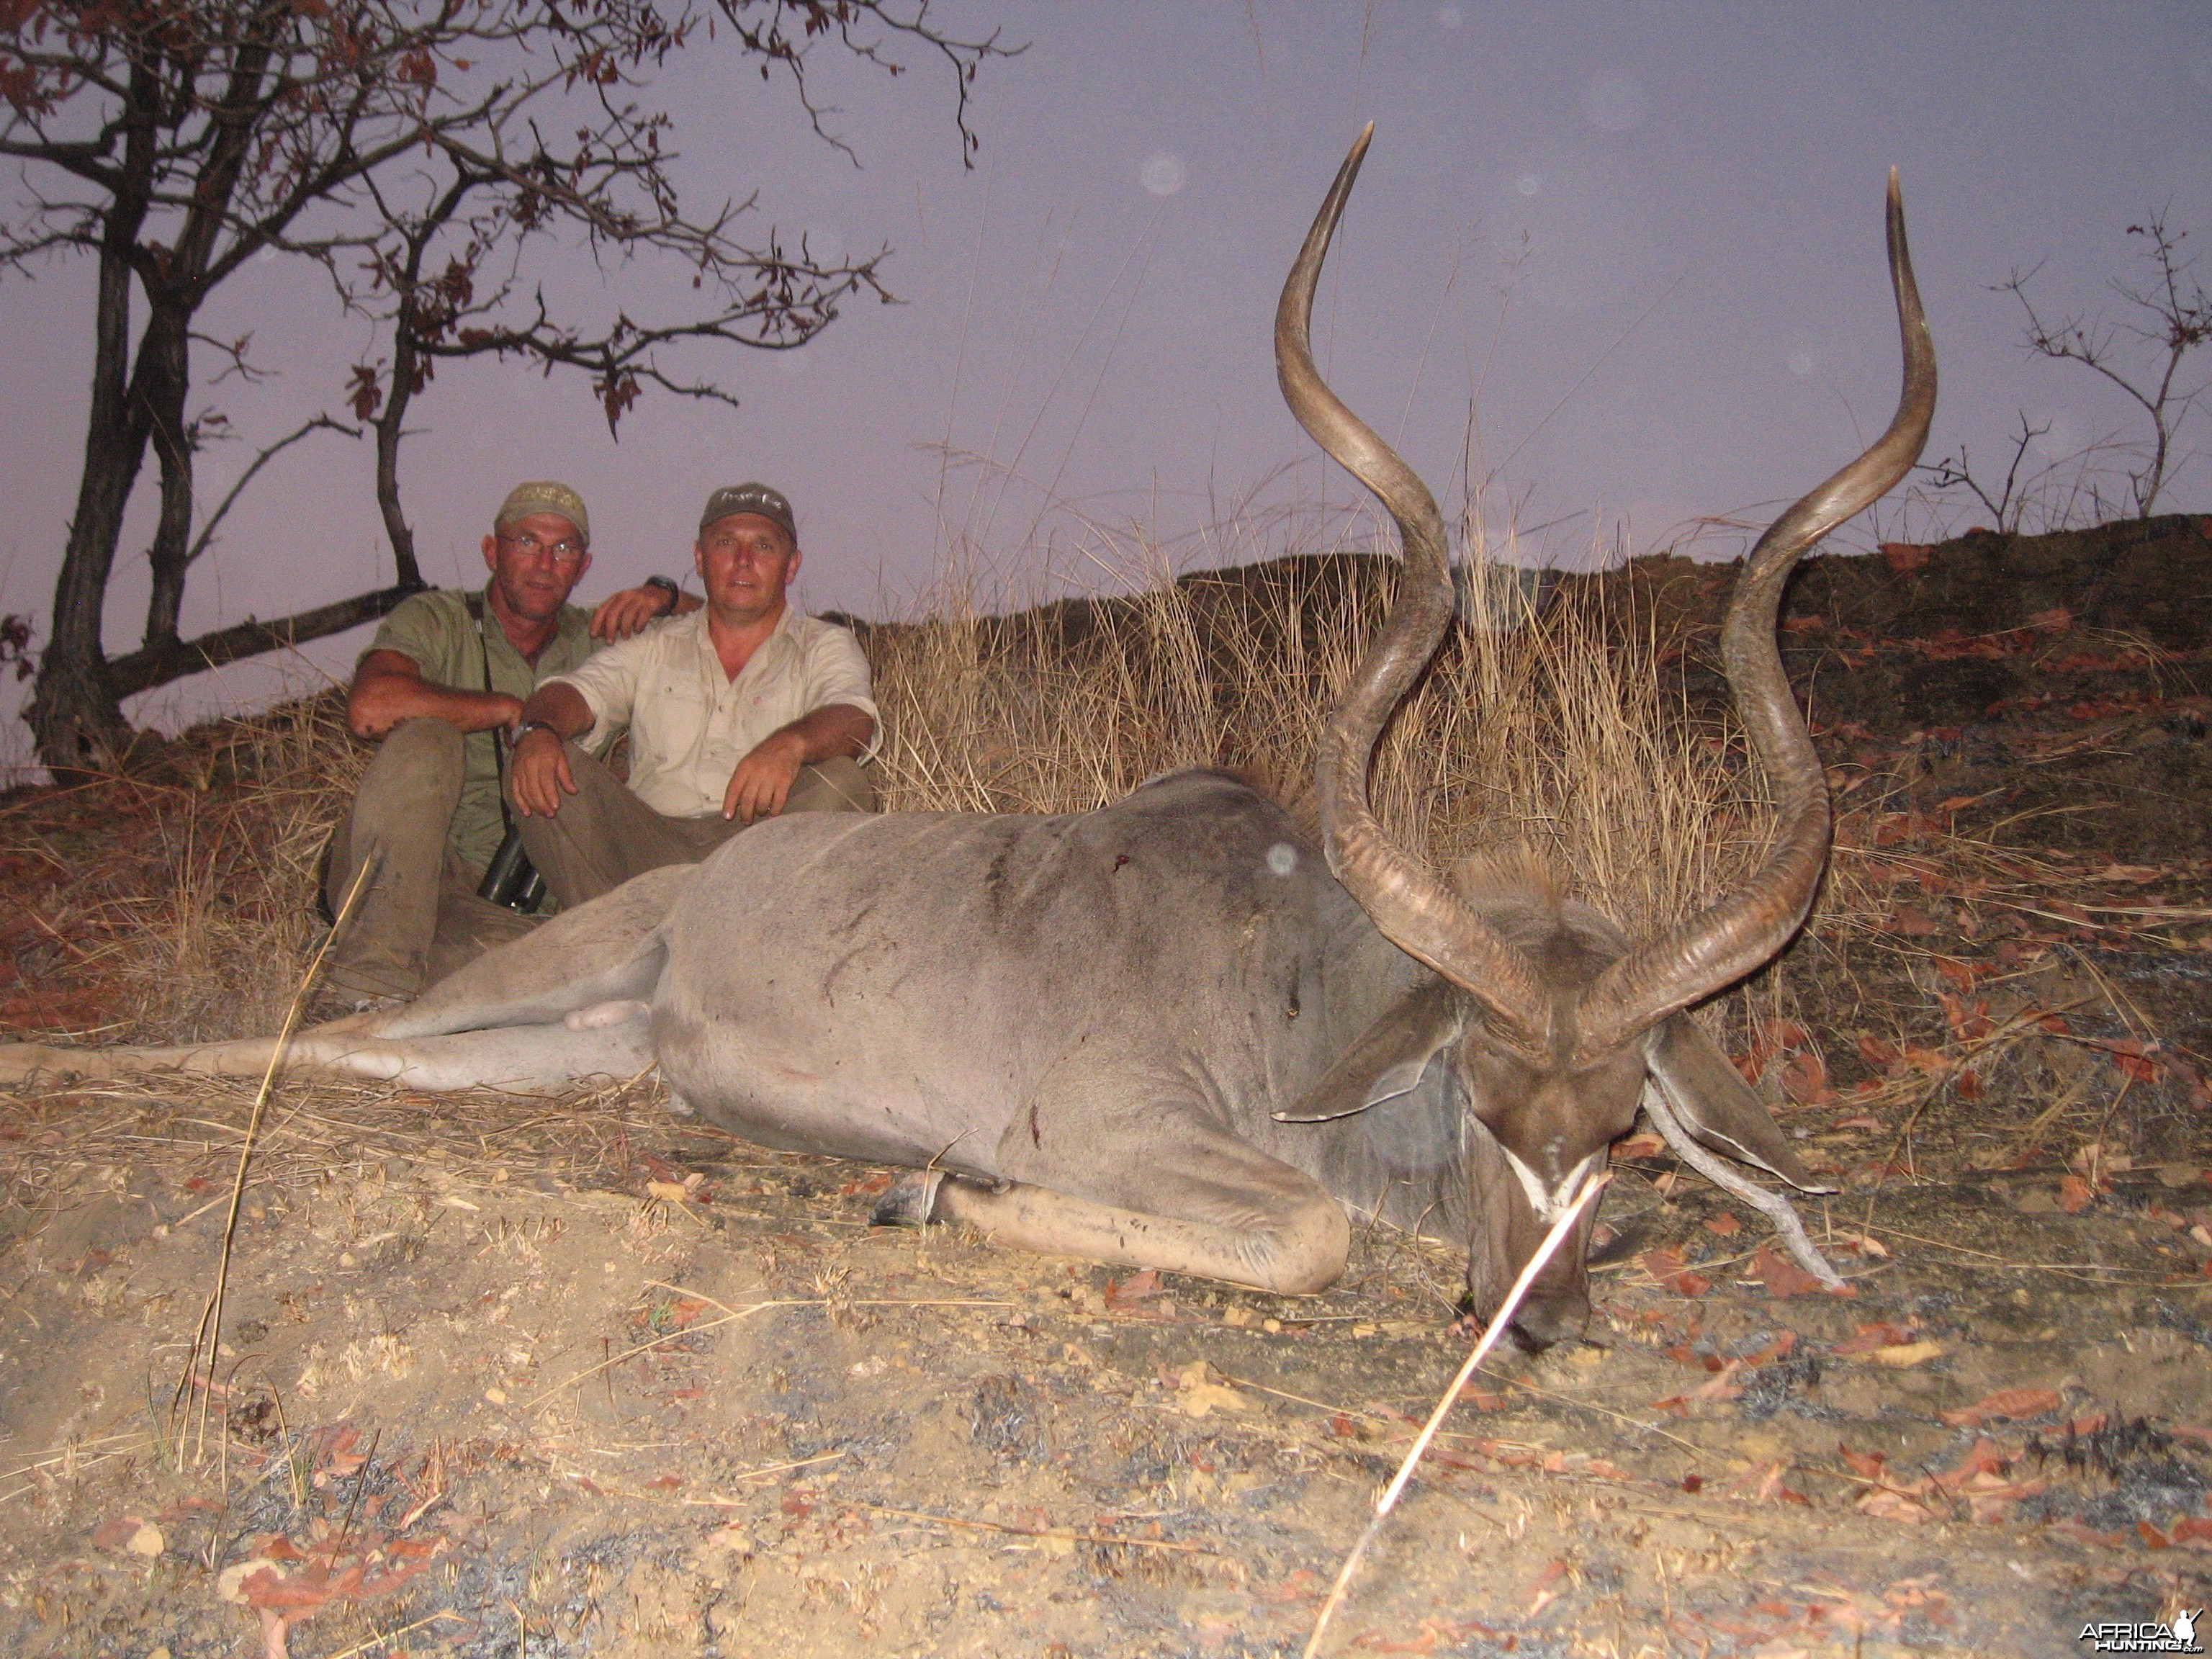 Big 55 inch East African Kudu from Selous Tanzania